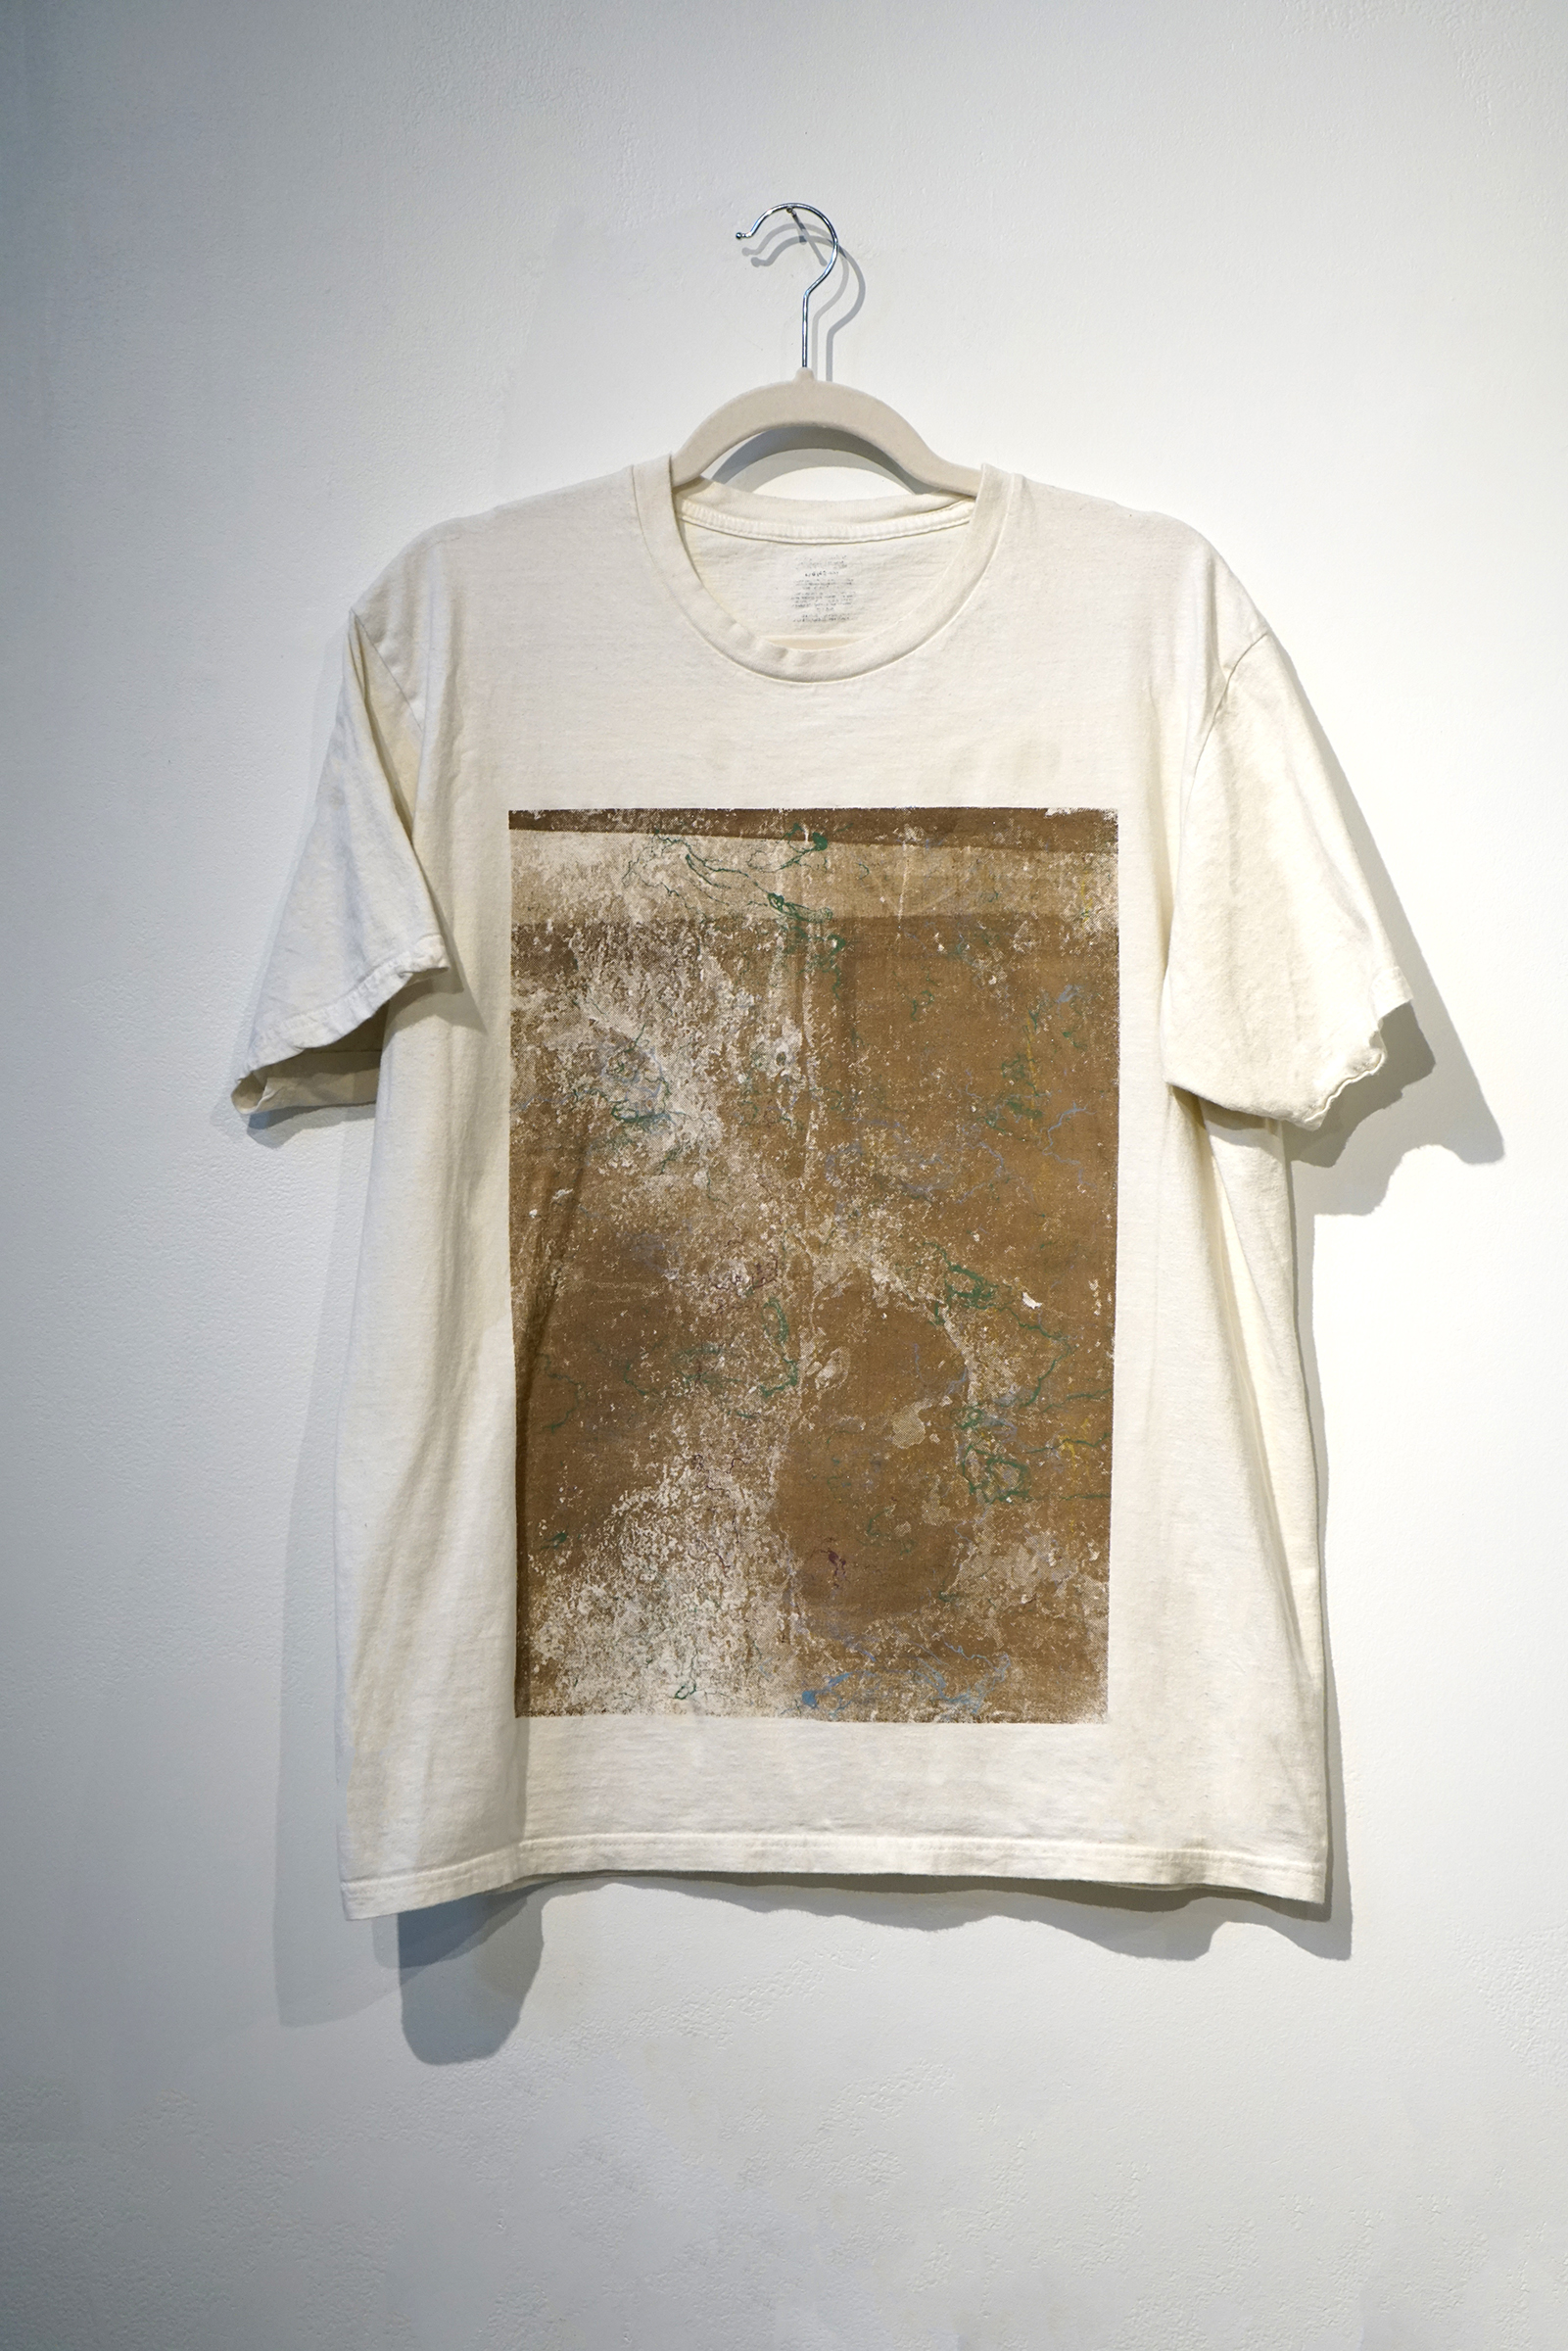 Shirt 5, screenprint on upcycled clothing by Rachel Carboni.